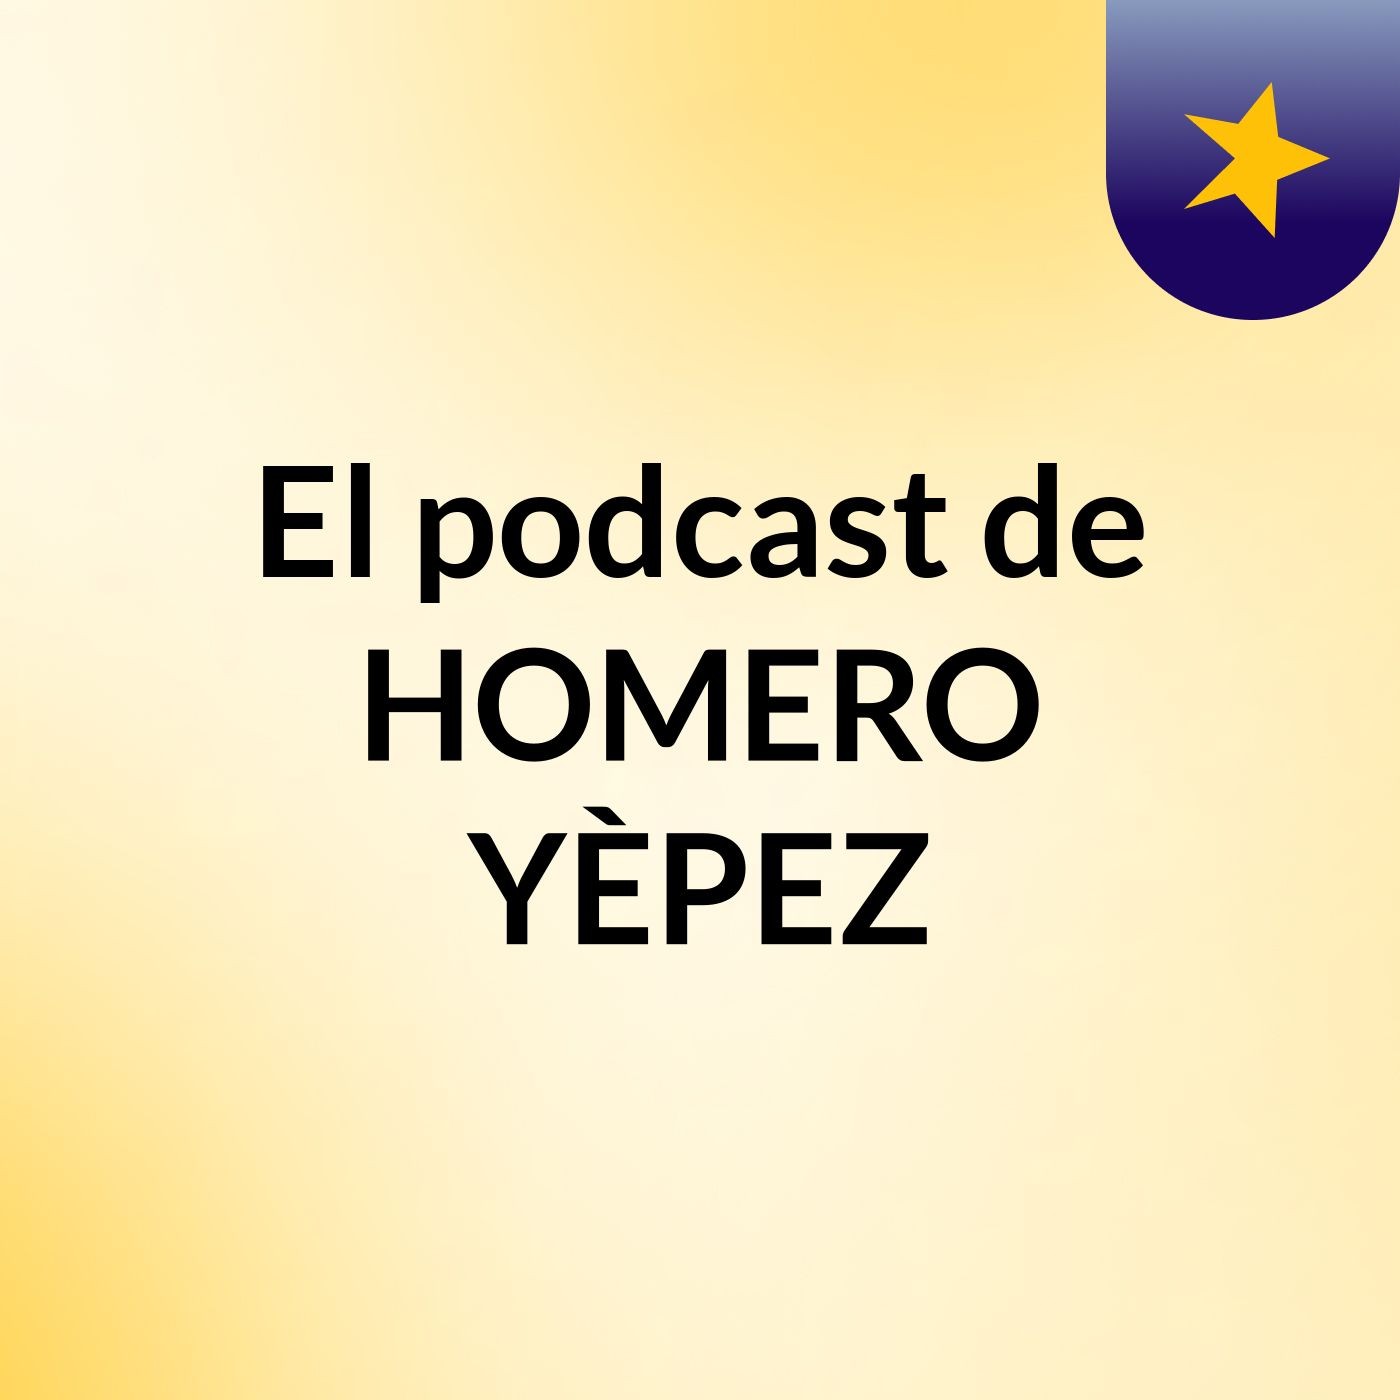 Episodio 2 - El podcast de HOMERO YÈPEZ